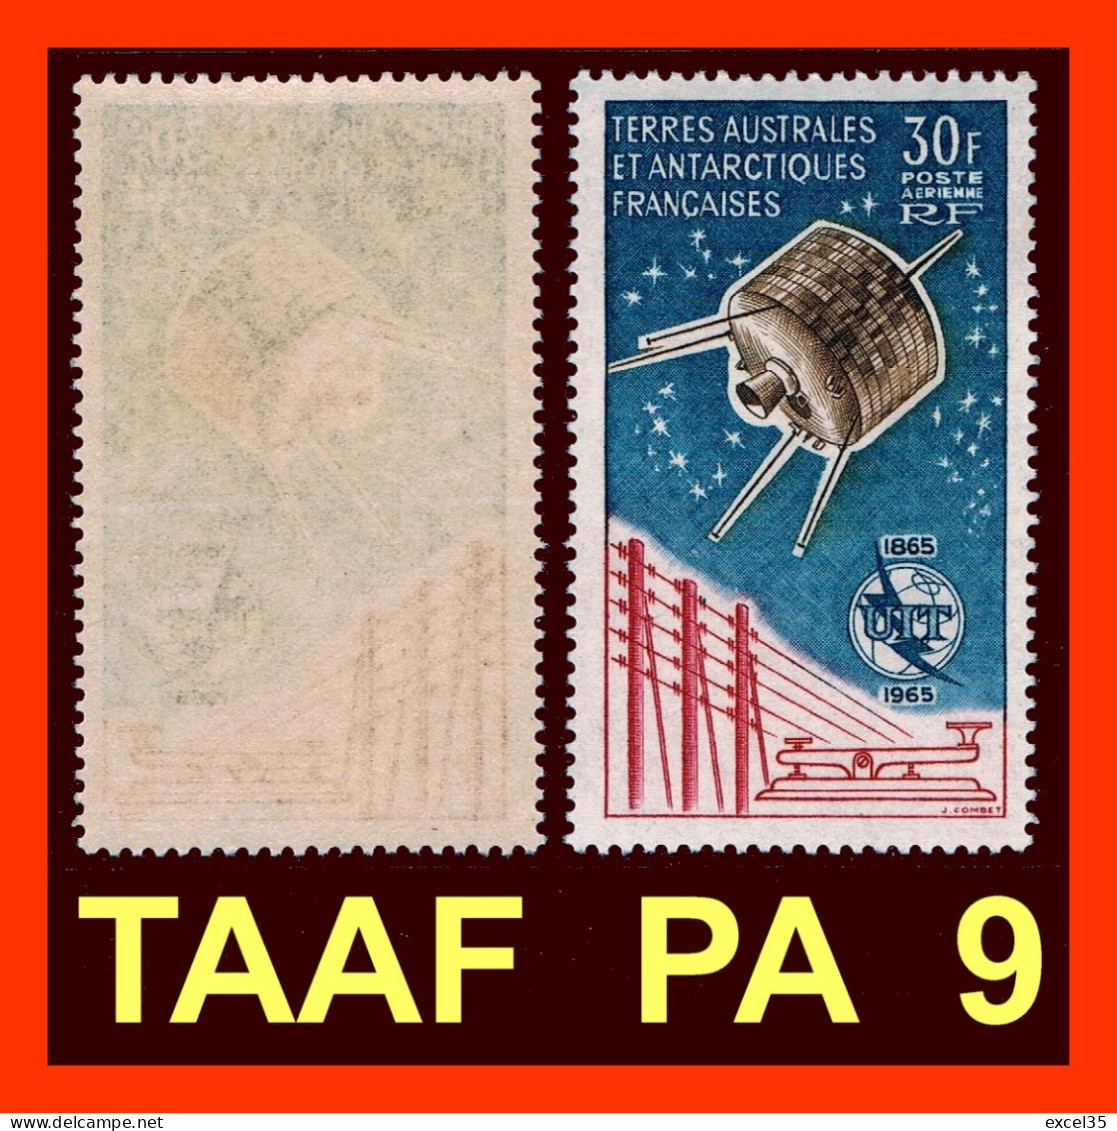 TAAF - YVERT N° PA9 TC - CENTENAIRE UIT - Satellite - SCAN RECTO-VERSO CONTRACTUEL - SANSURPRISE - Unused Stamps